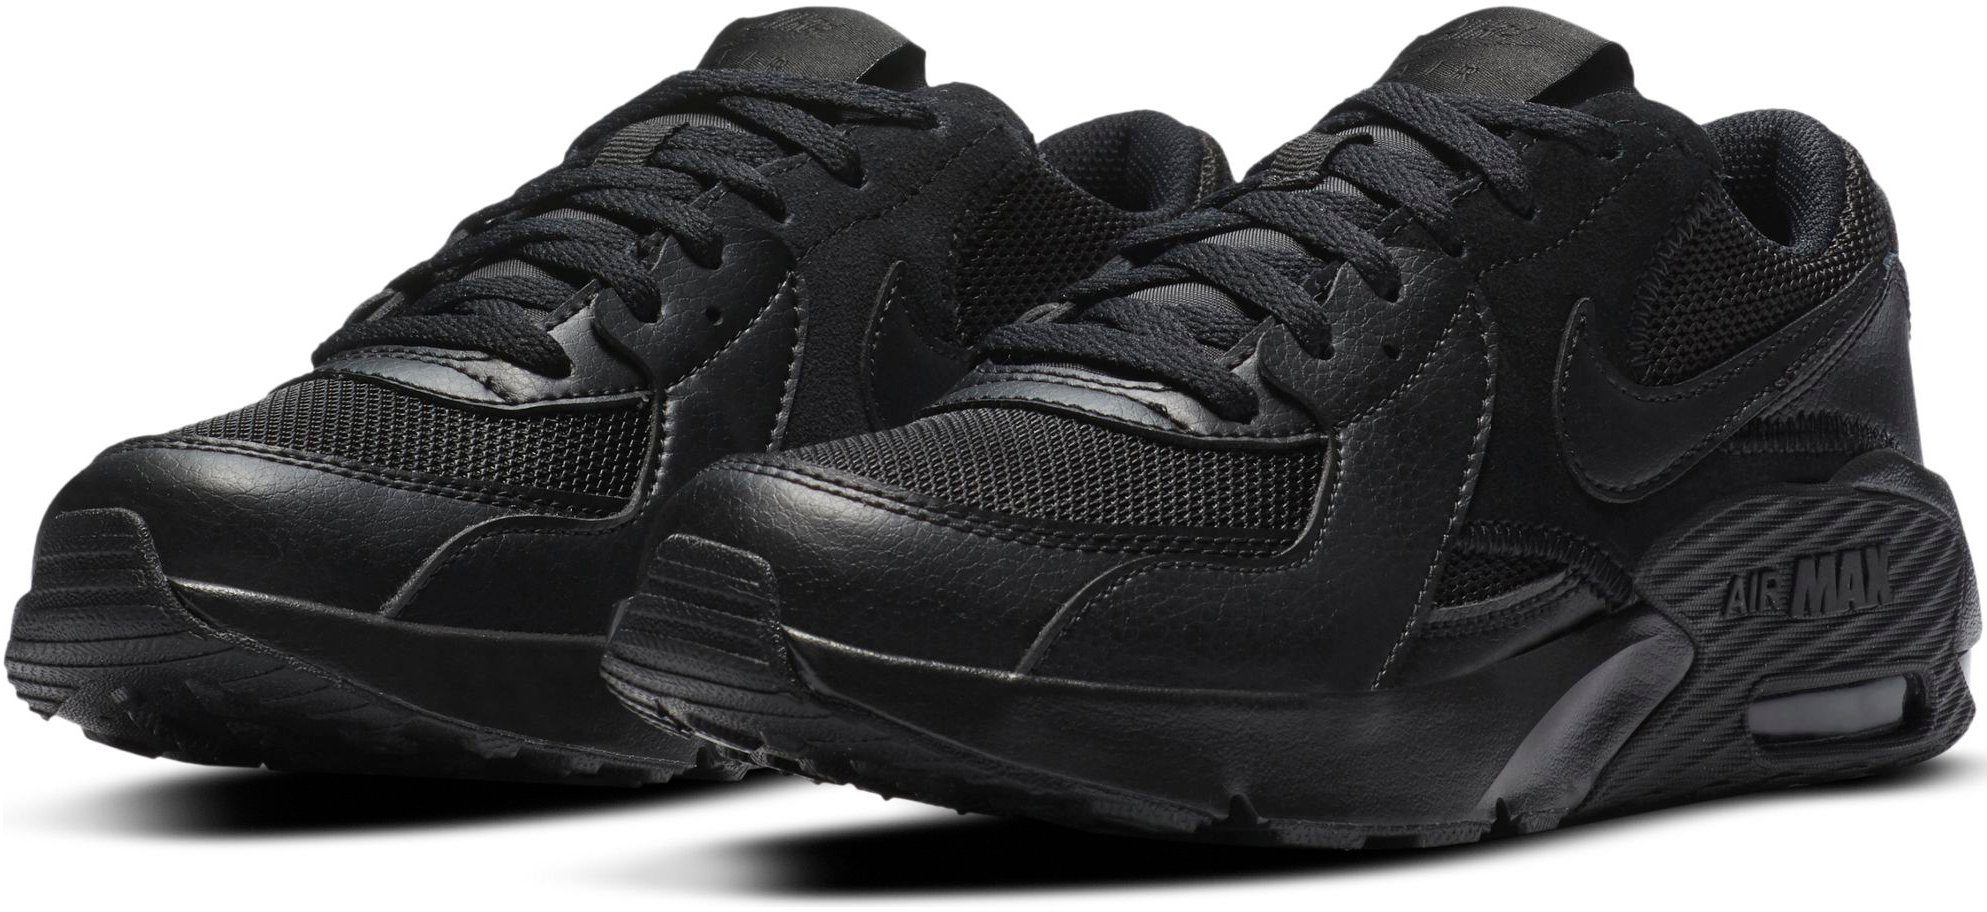 Nike Sportswear Air Max Excee Sneaker online kaufen | OTTO